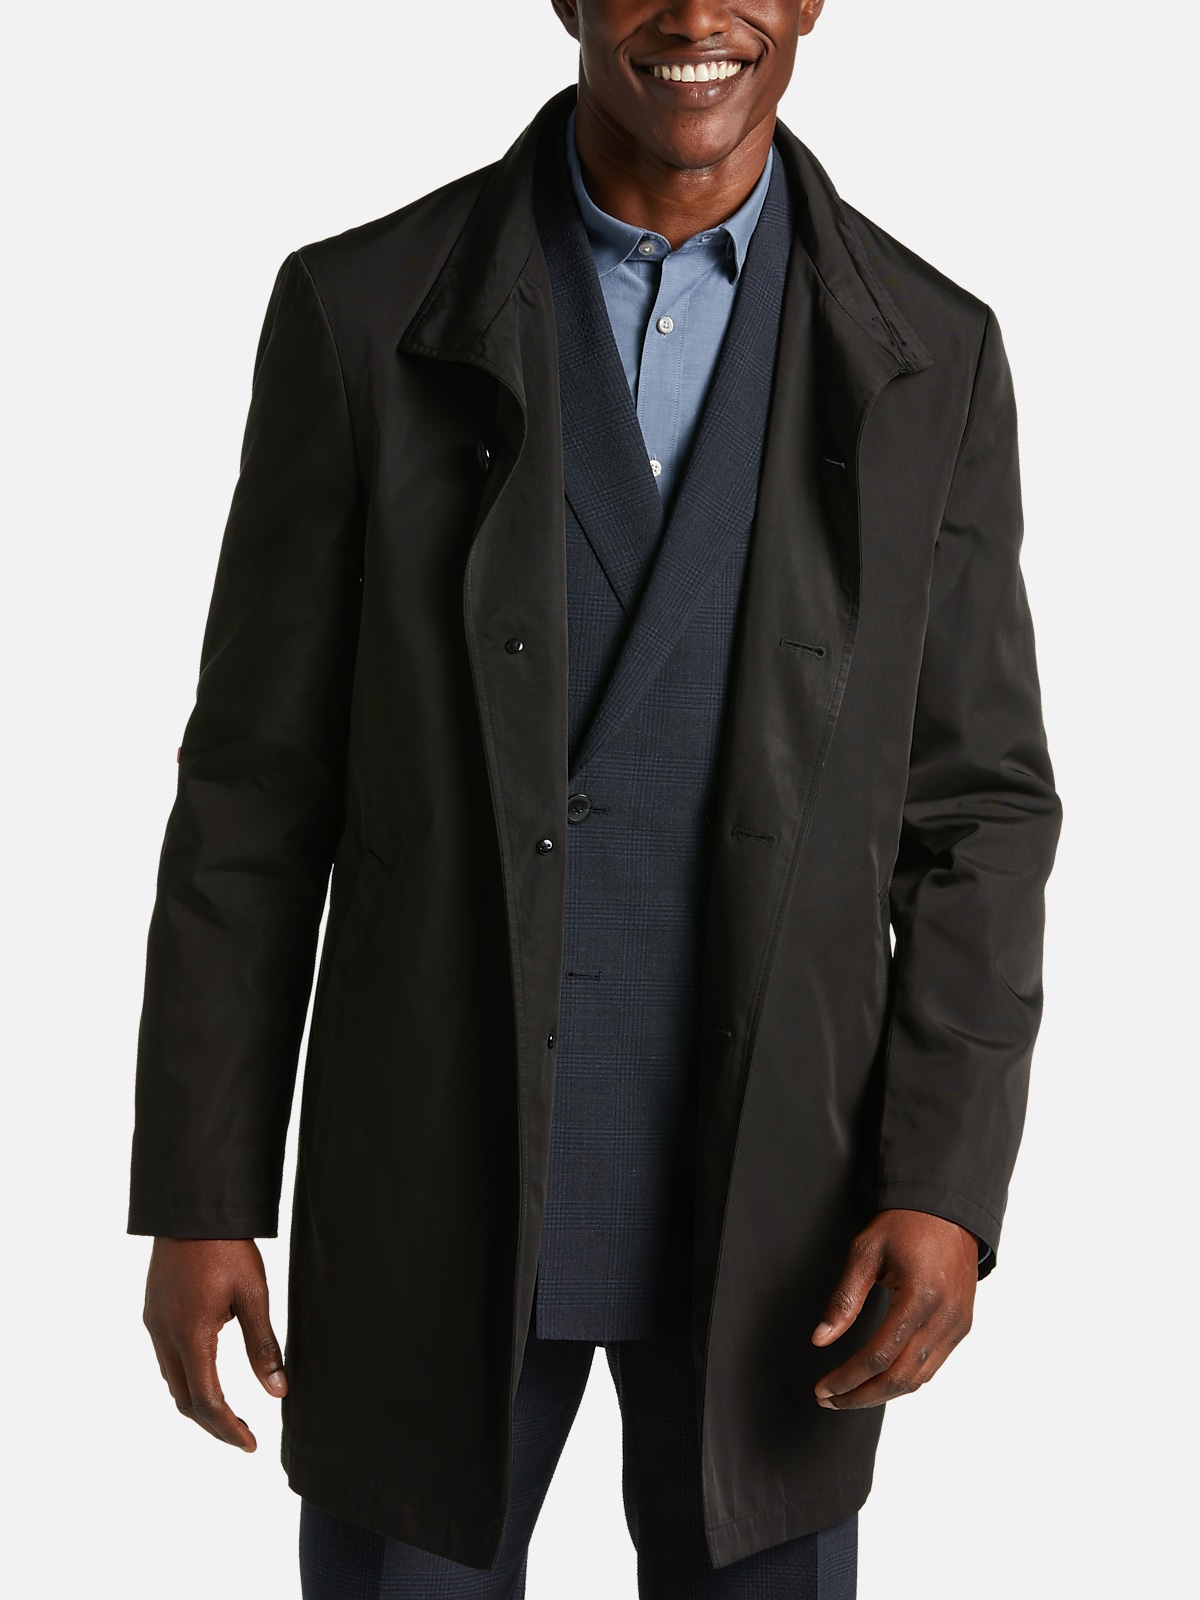 Calvin Klein Slim Fit Raincoat | All Clearance $39.99| Men's Wearhouse